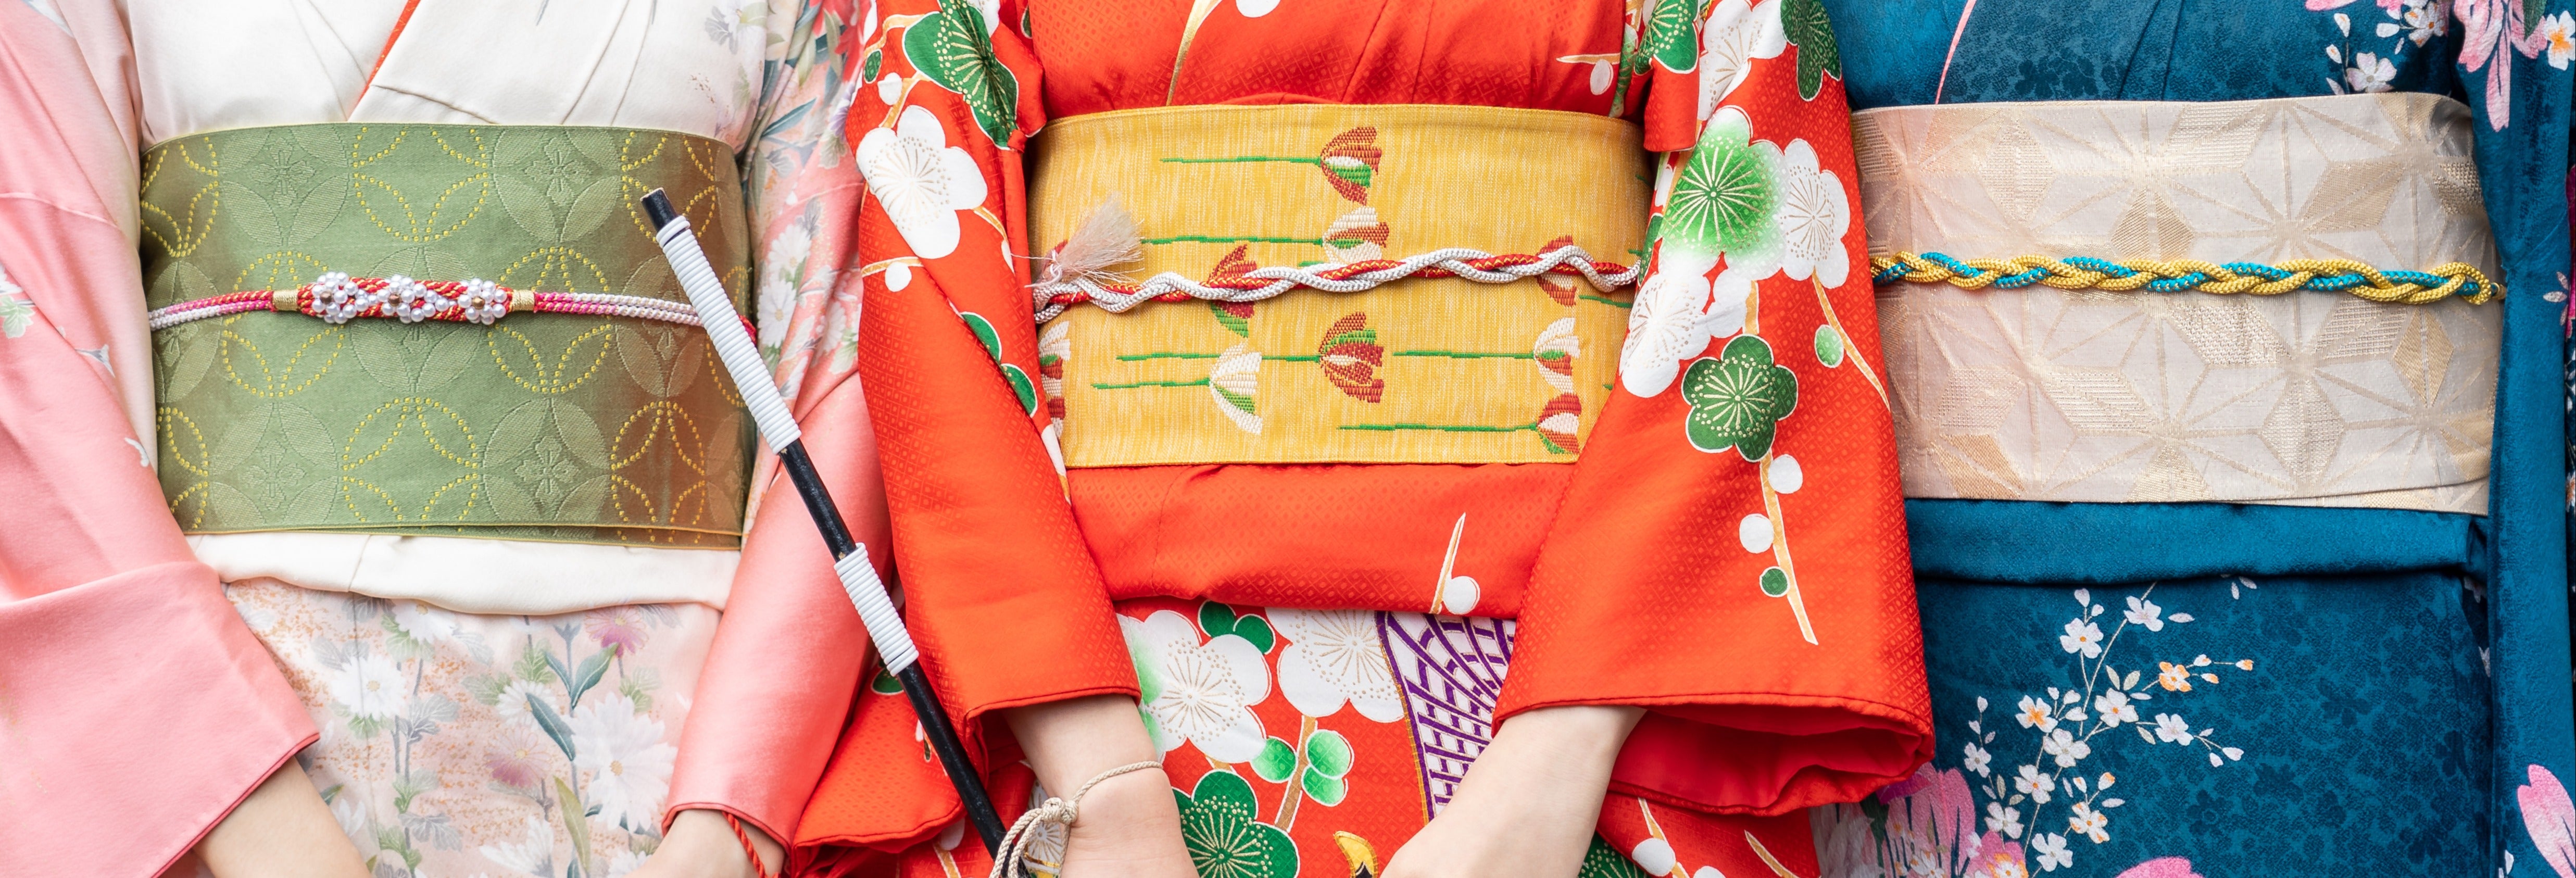 Experiência cultural de quimono